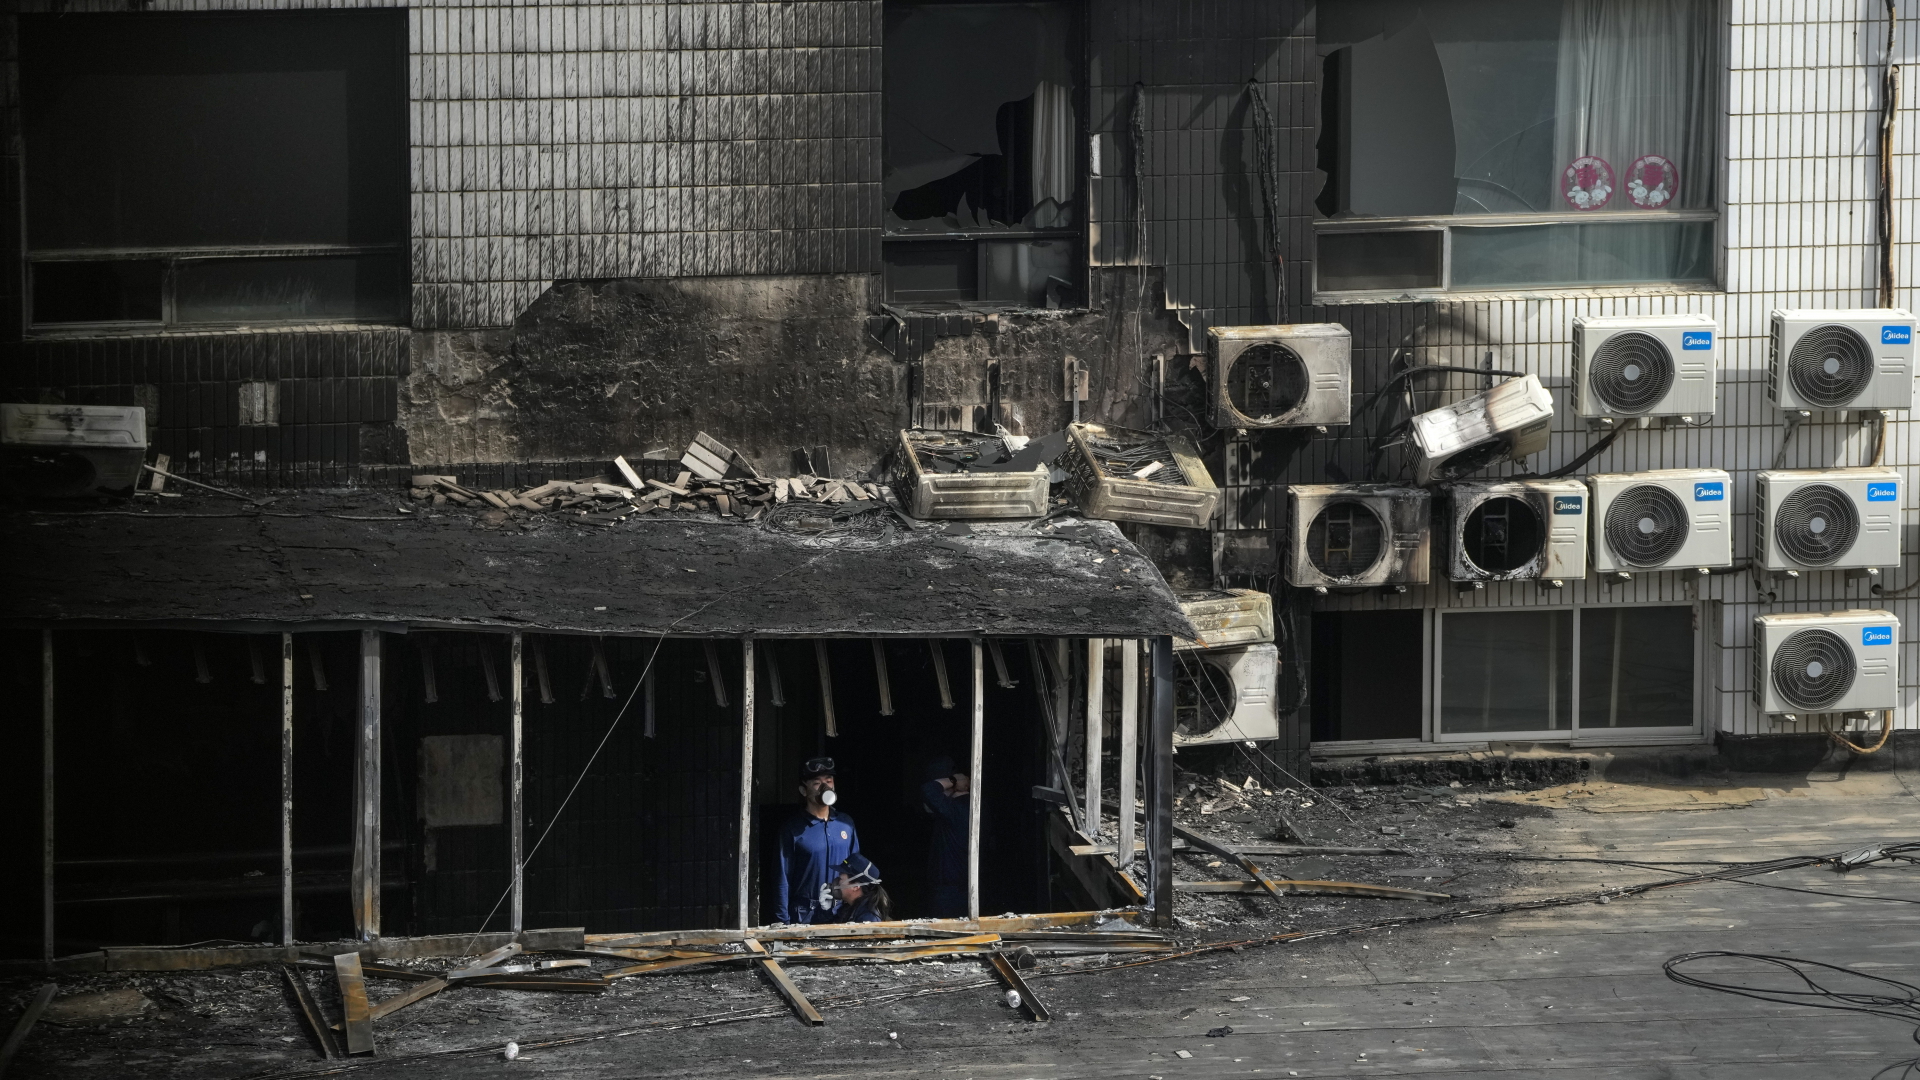 Kematian dalam Kebakaran Rumah Sakit: Penangkapan Setelah Kebakaran di Klinik Beijing